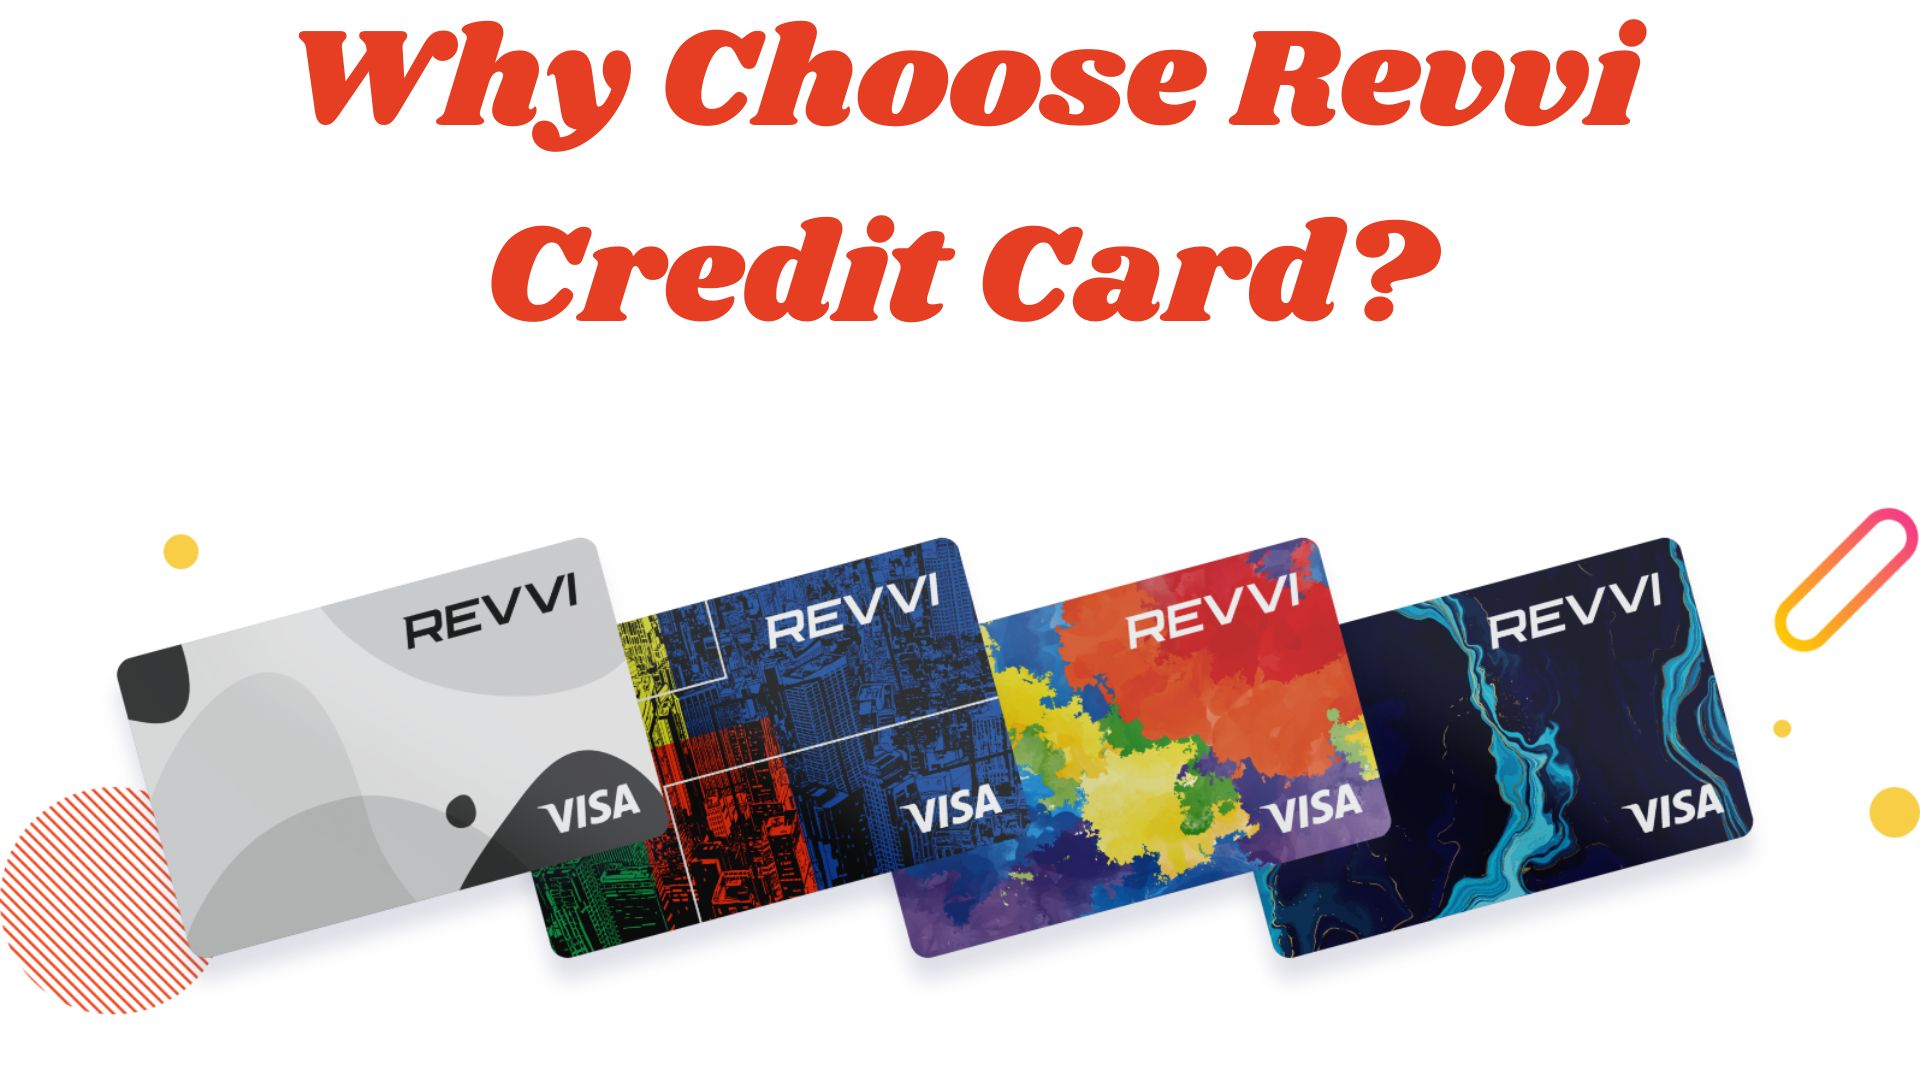 Why Choose Revvi Credit Card?